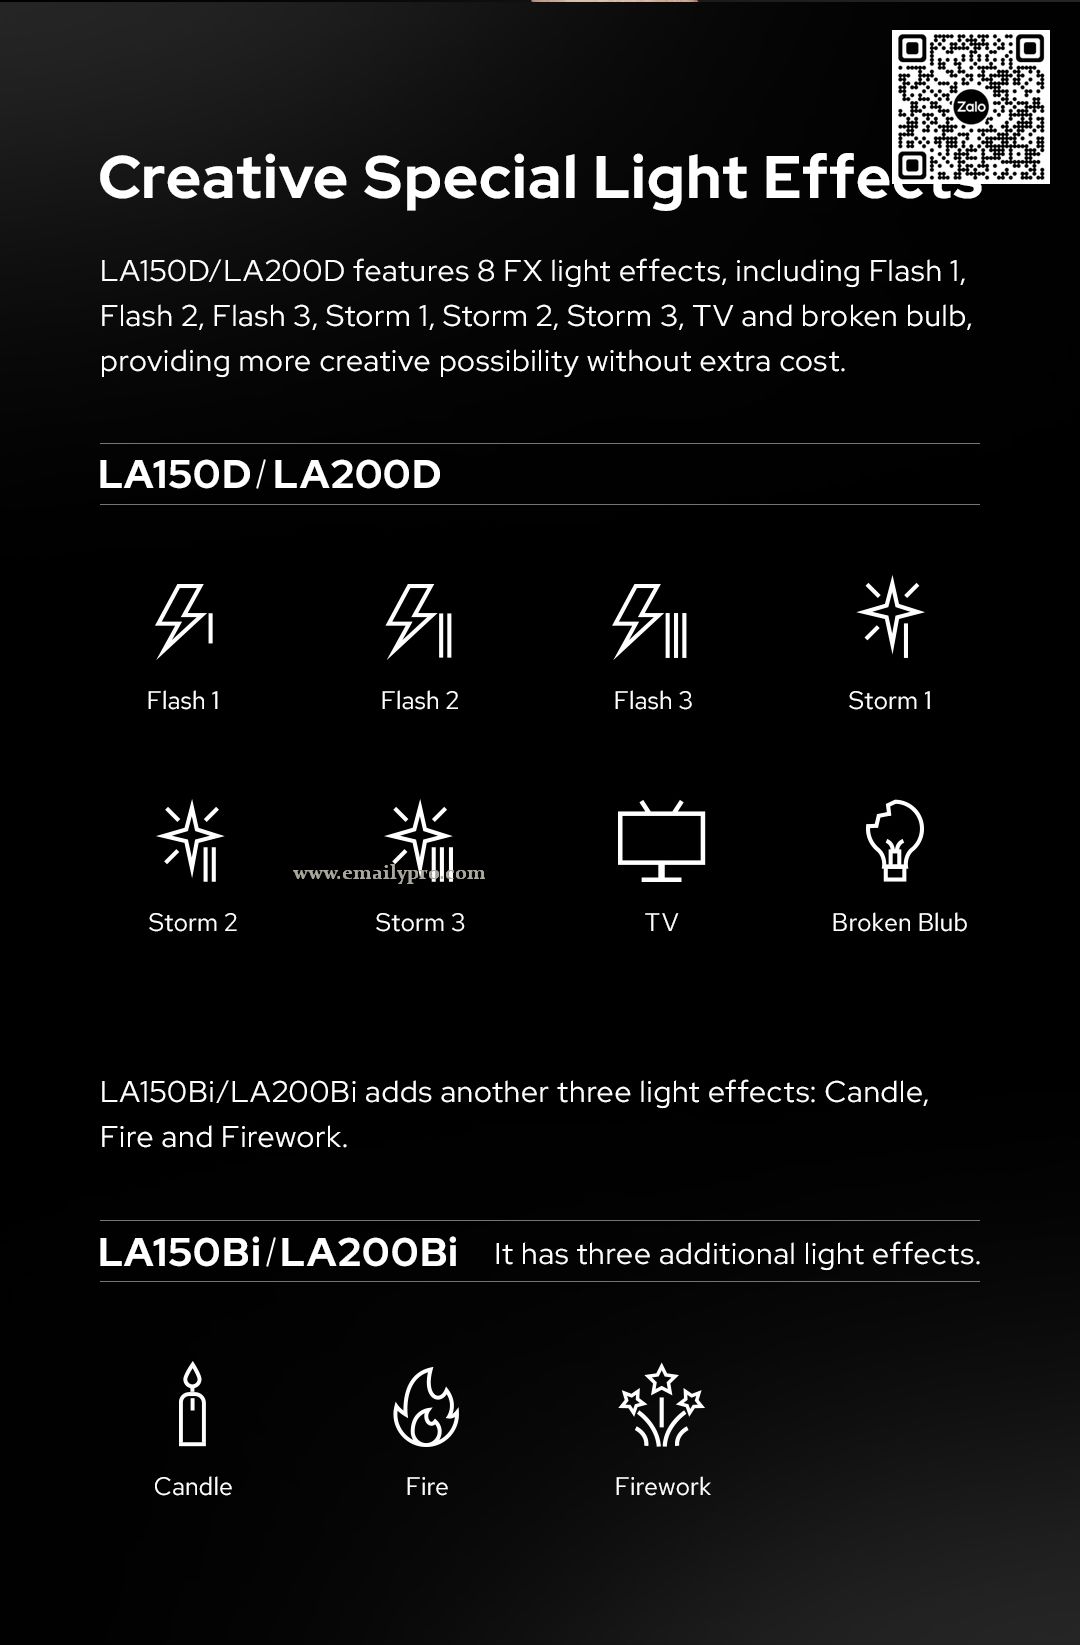 GODOX LITEMONS LA-150Bi LED VIDEO LIGHT